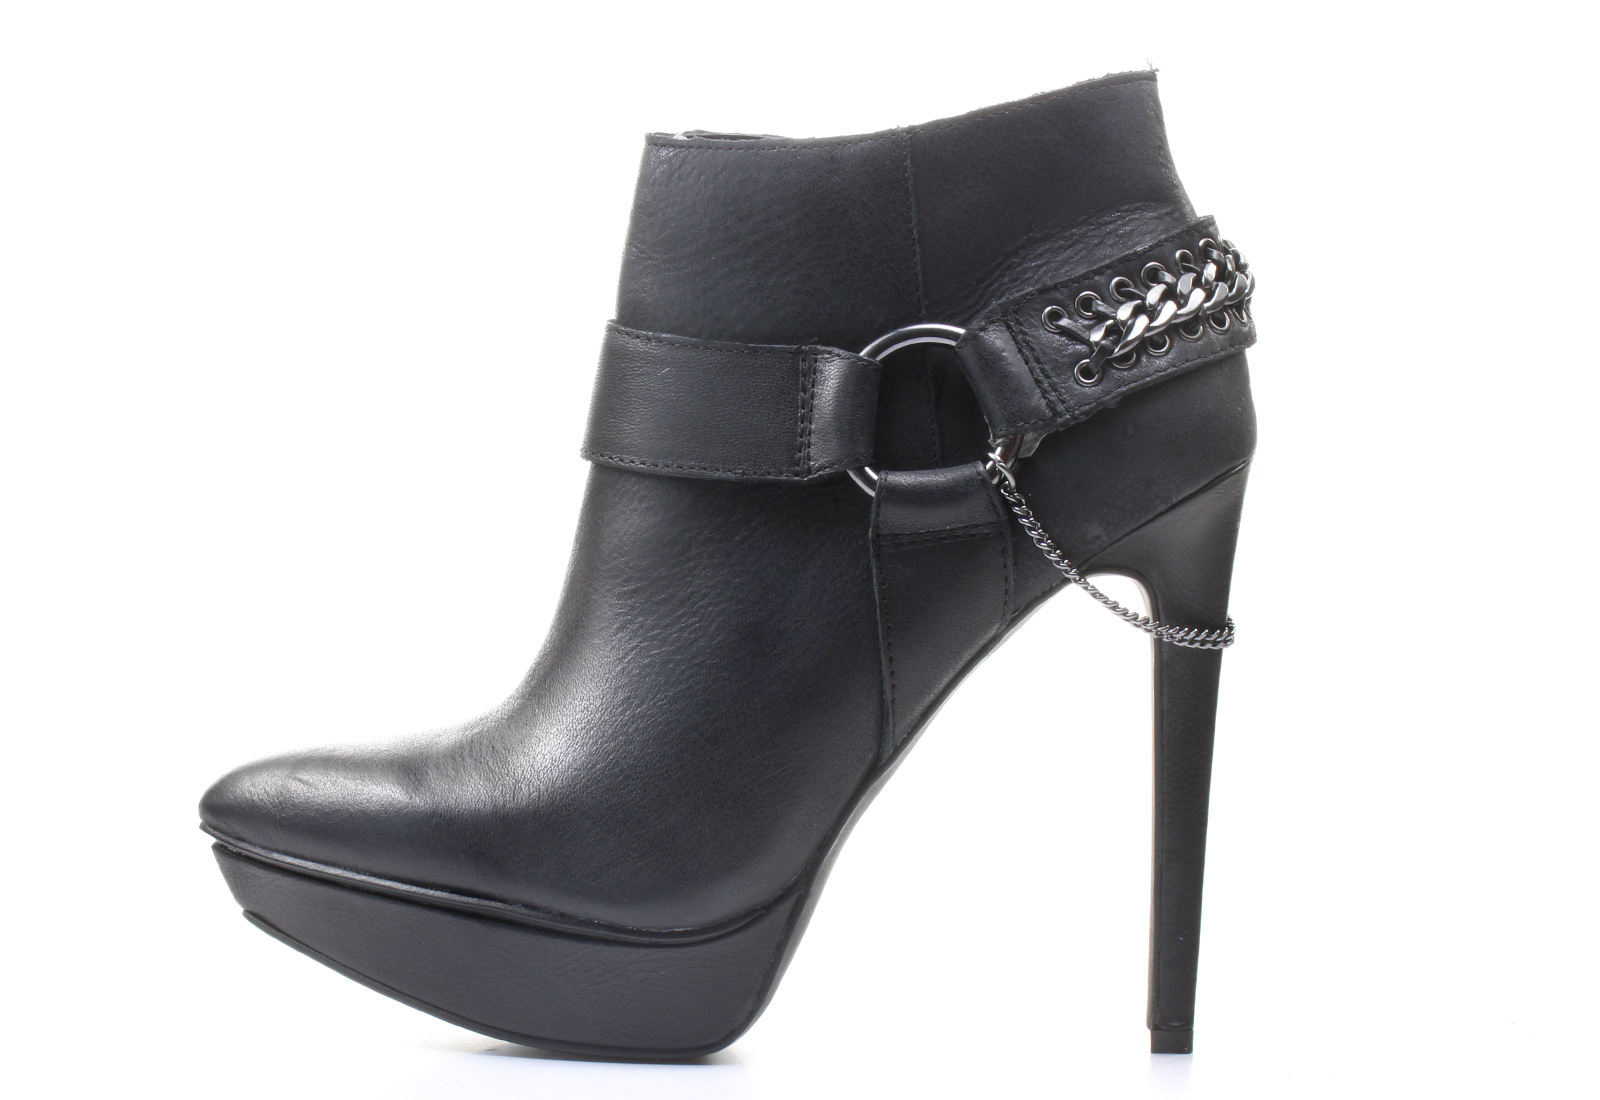 Jessica Simpson Boots - Vinata - vinata-blk - Online shop for sneakers, shoes and boots1600 x 1100